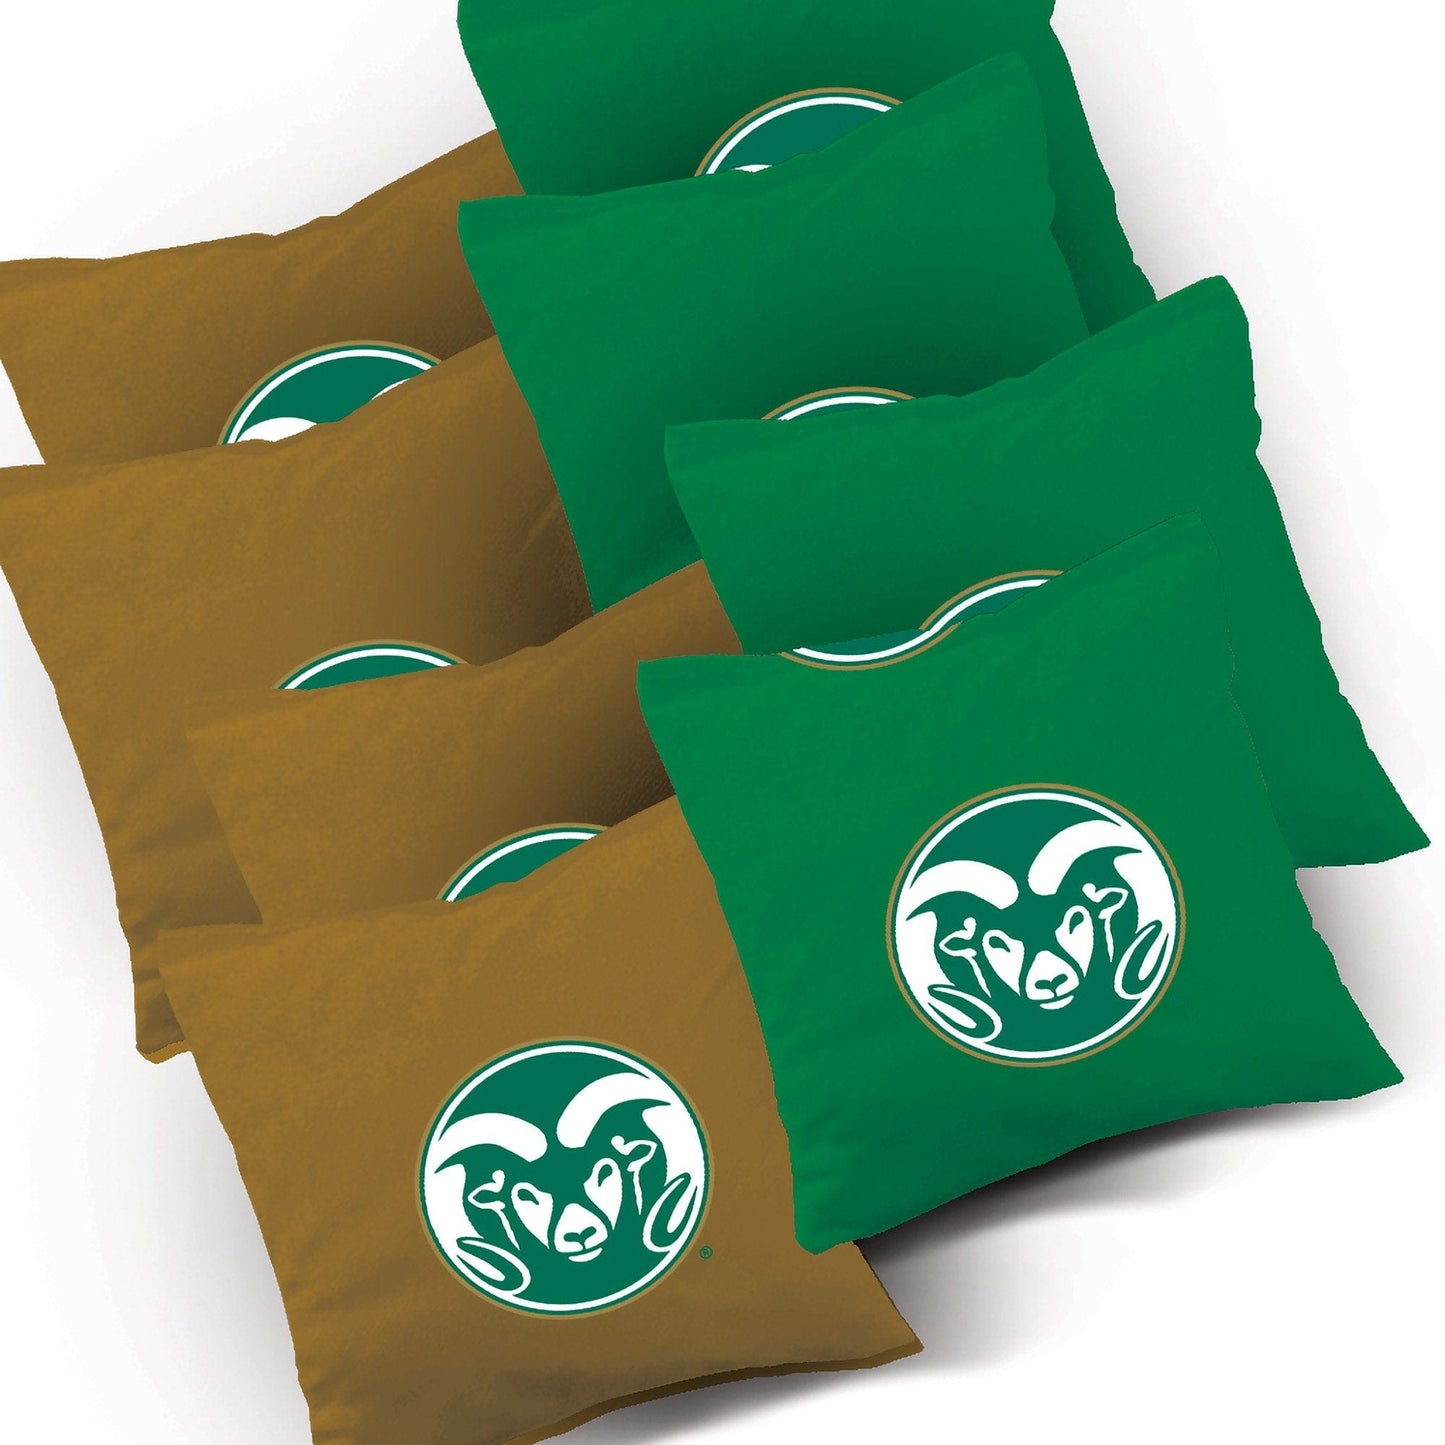 Colorado State Stripe team logo corn hole bags